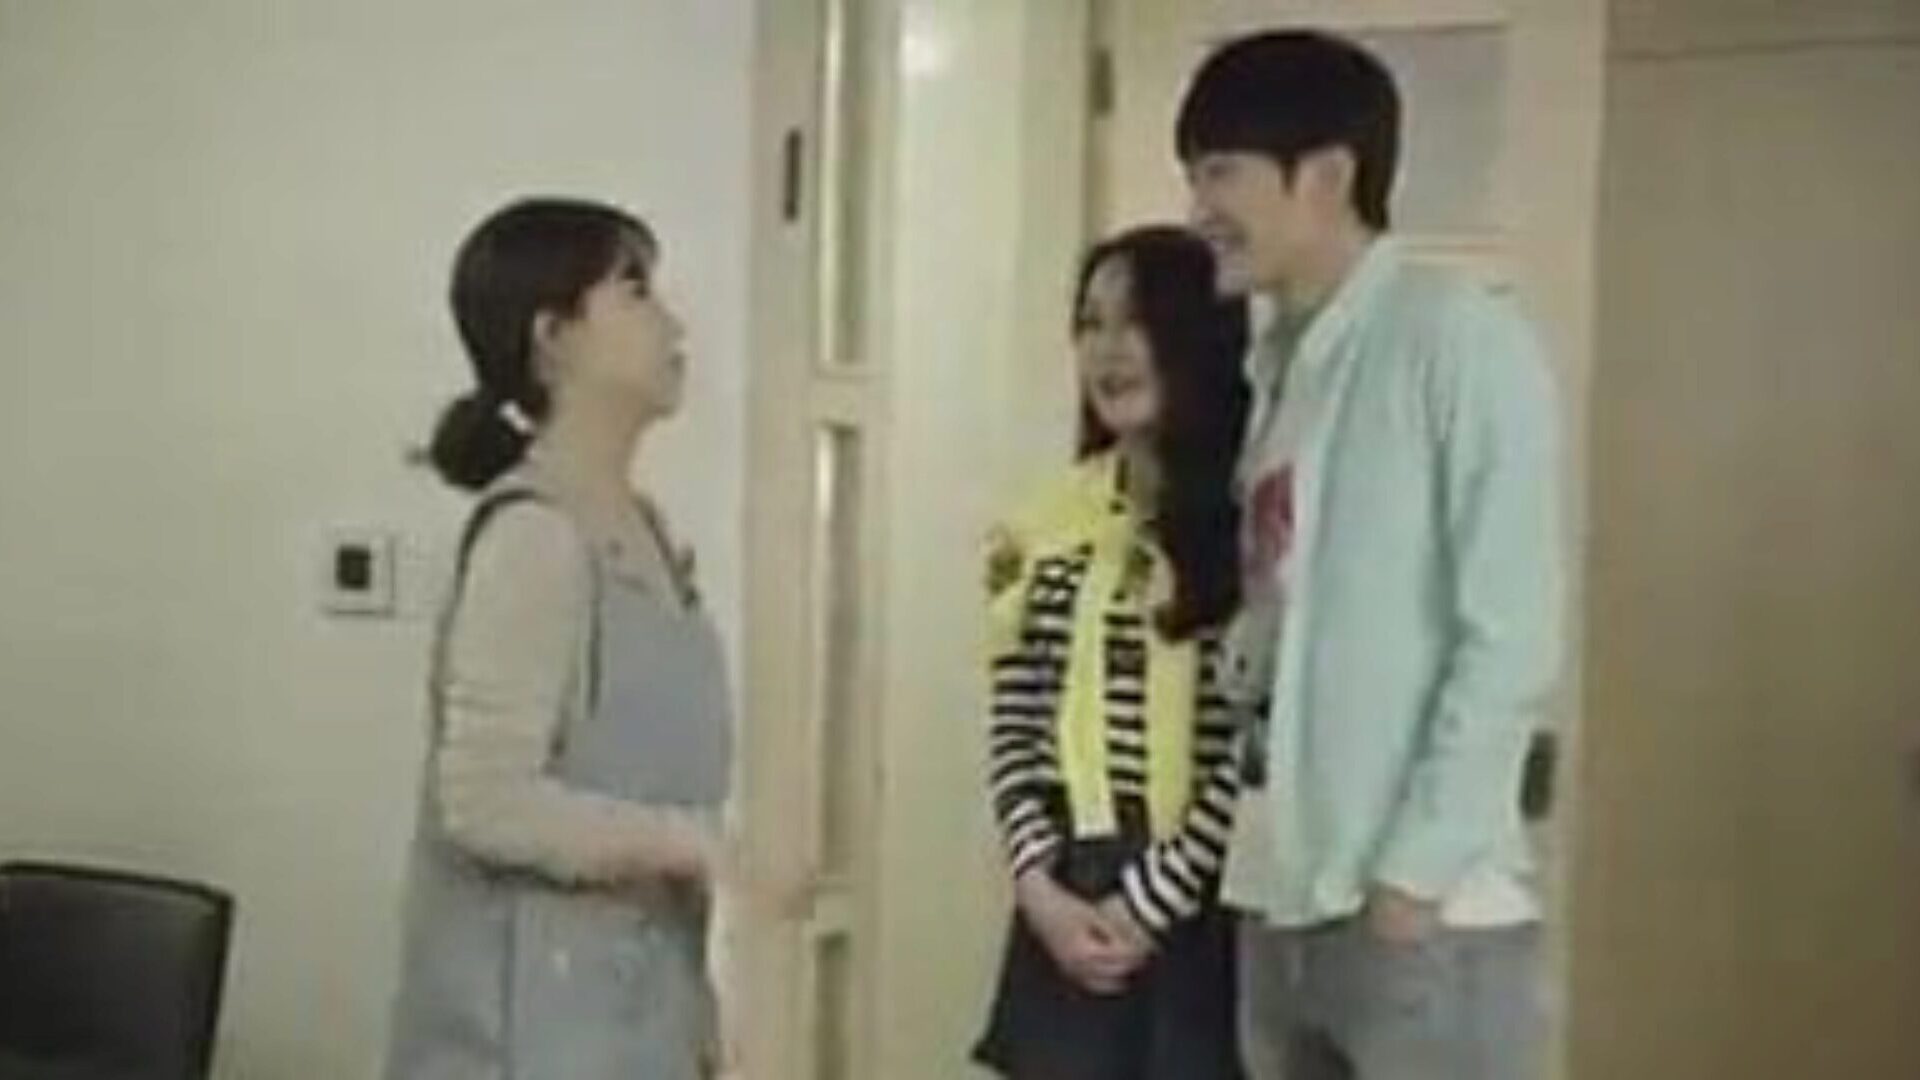 mor & søns ven knepper i køkkenet - koreansk film koreansk filmklip - mor & søns ven knepper i køkkenet, mens svigersøn banker med sin kæreste i rummet